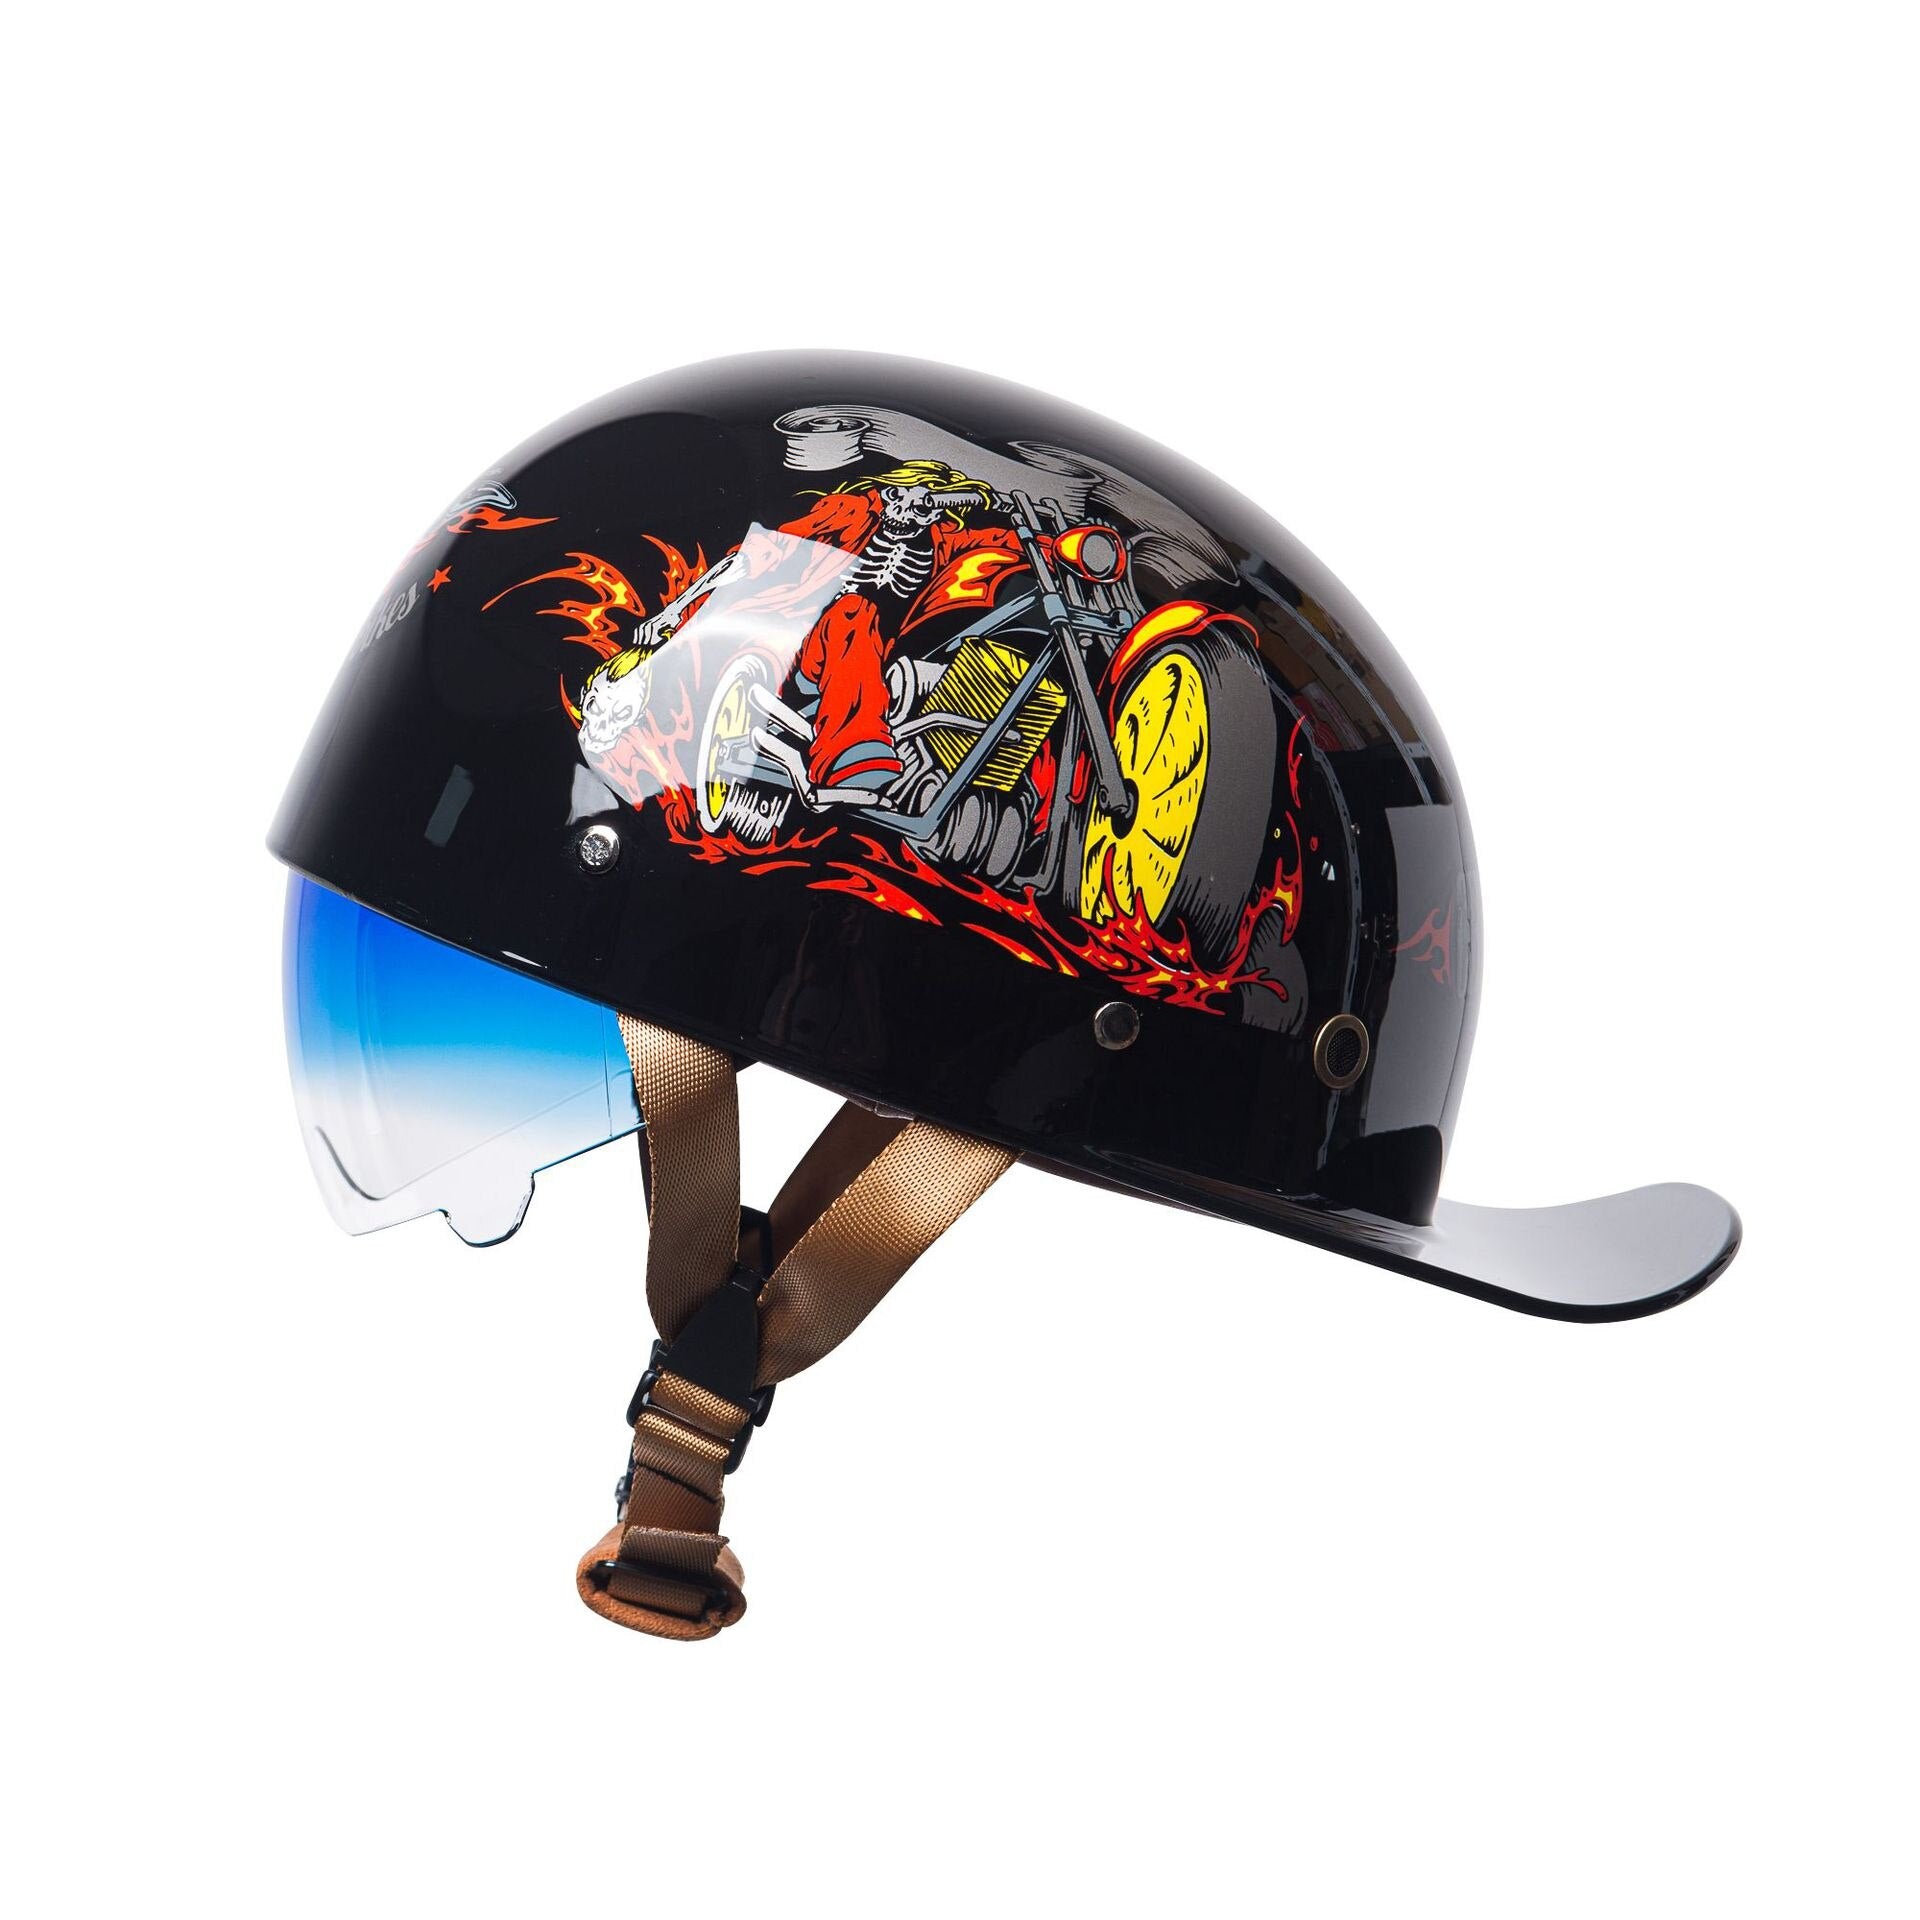 Retro DS gangster personality baseball cap helmet motorcycle